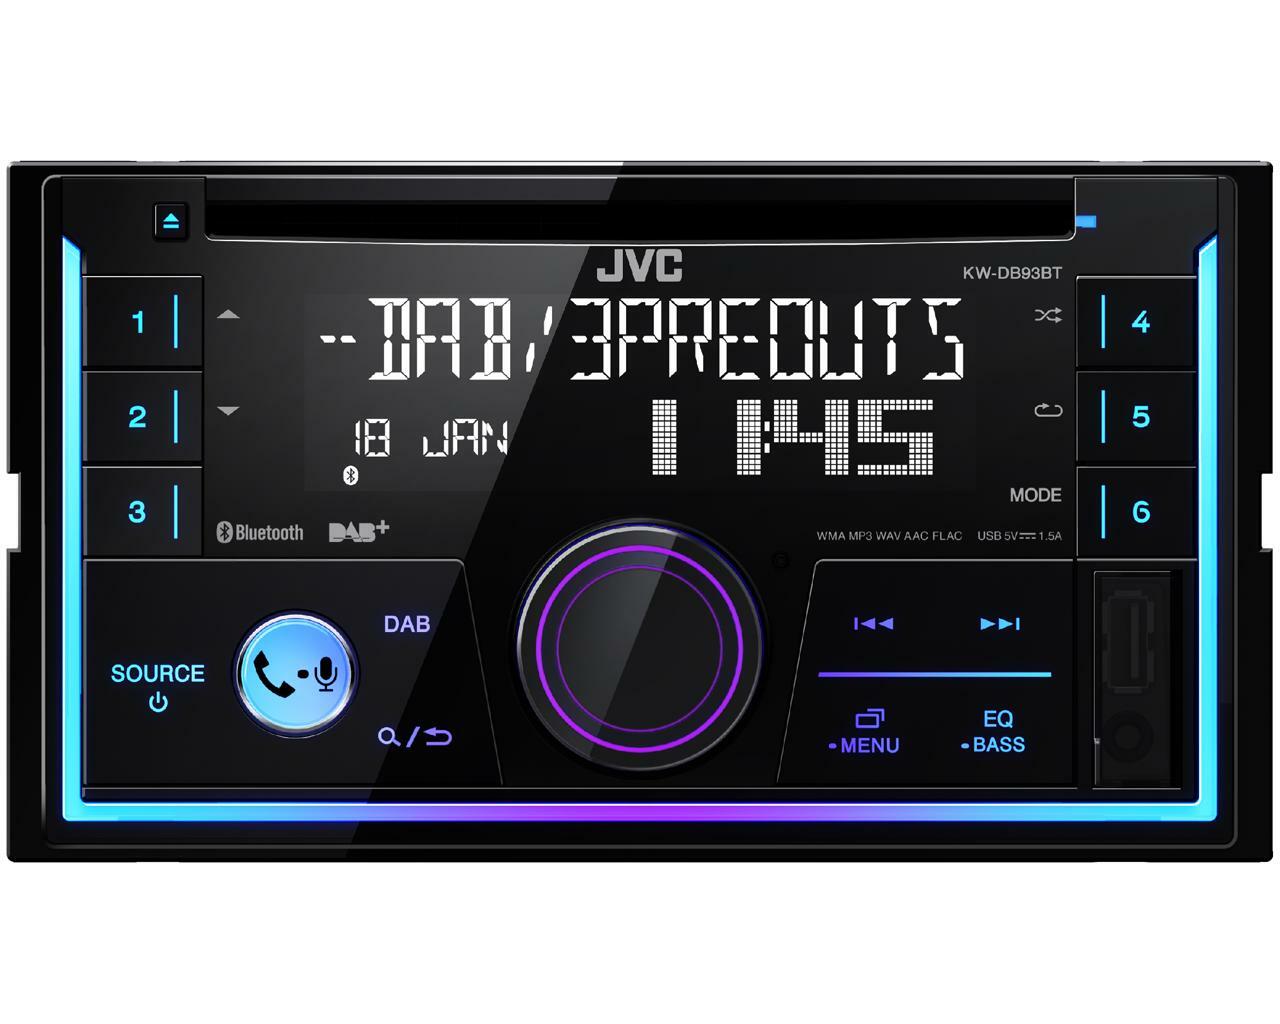 JVC KW-DB93BT 2 DIN méretű CD/USB autórádió DAB rádióval, Bluetooth fu...